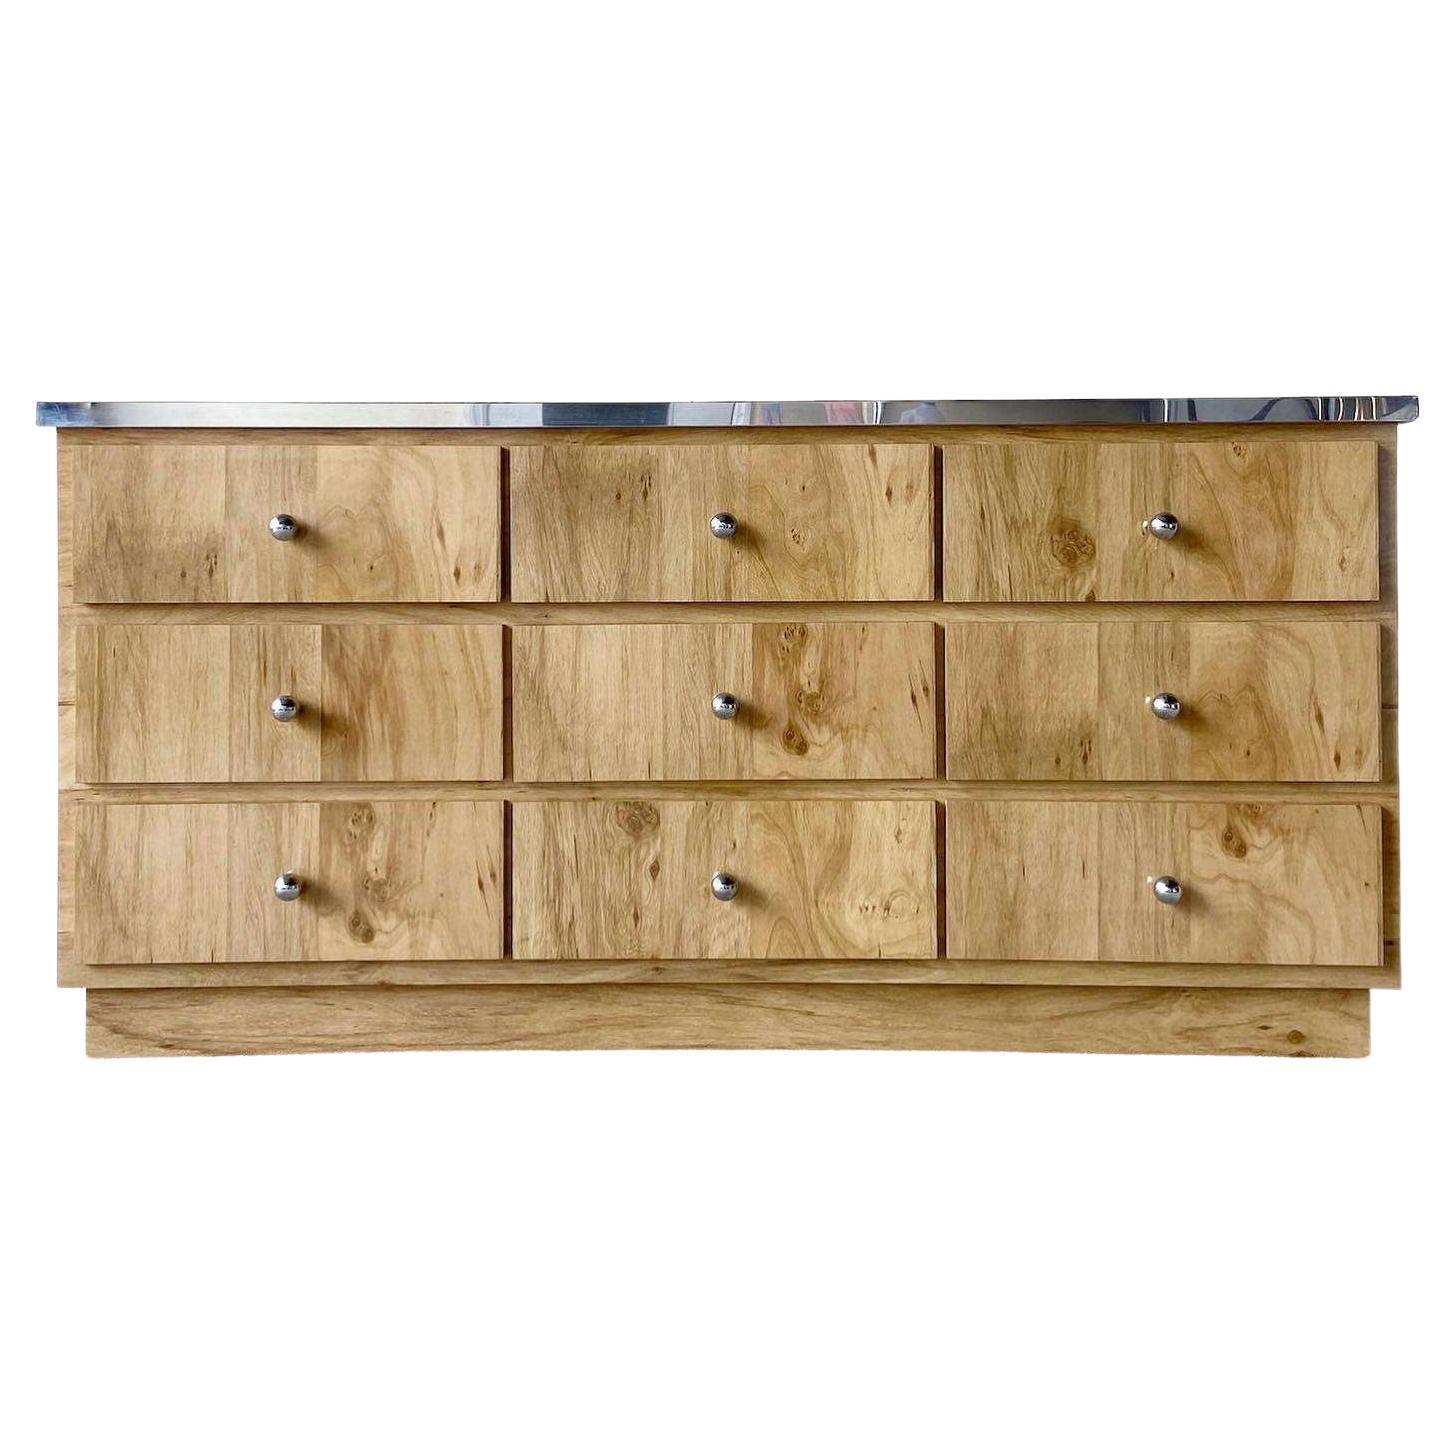 Postmodern Wood Grain Laminate and Chrome Dresser - 9 Drawers For Sale